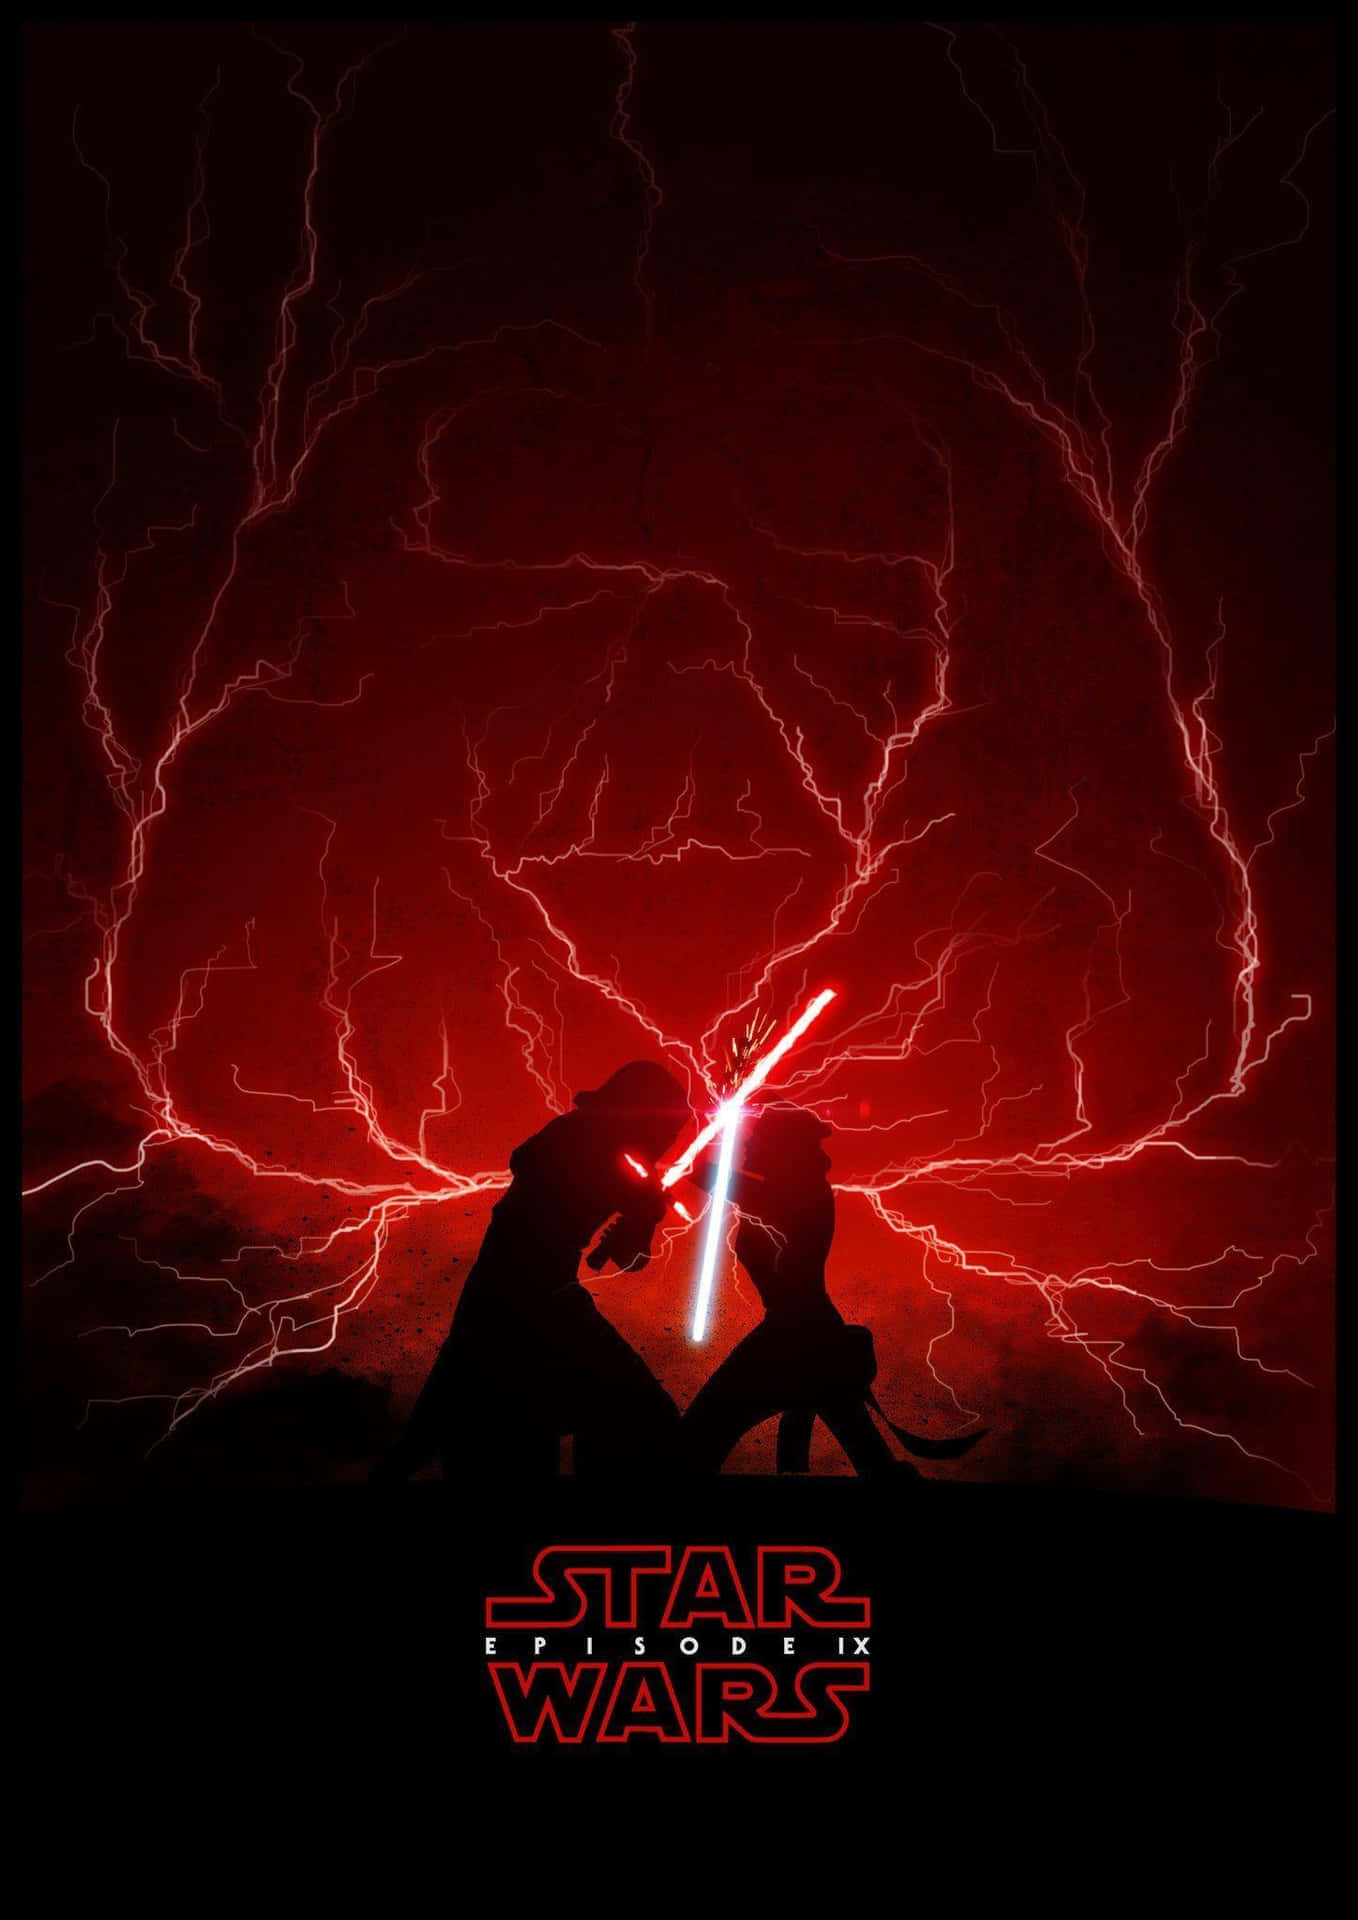 Star Wars Episode I X Duel Poster Wallpaper